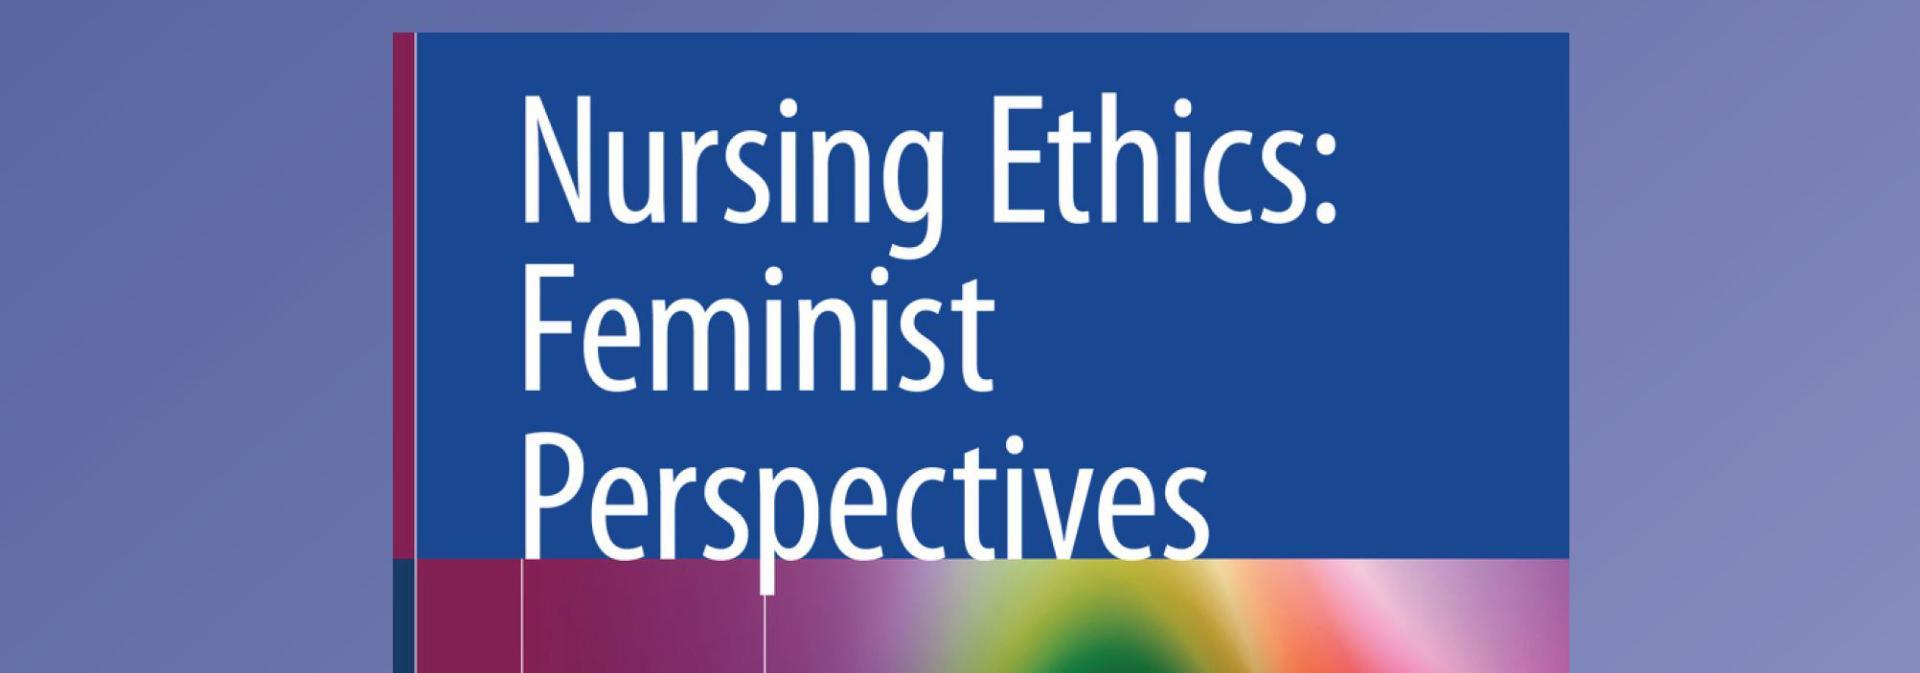 Nursing Ethics Feminist Perspectives Launch 23 February